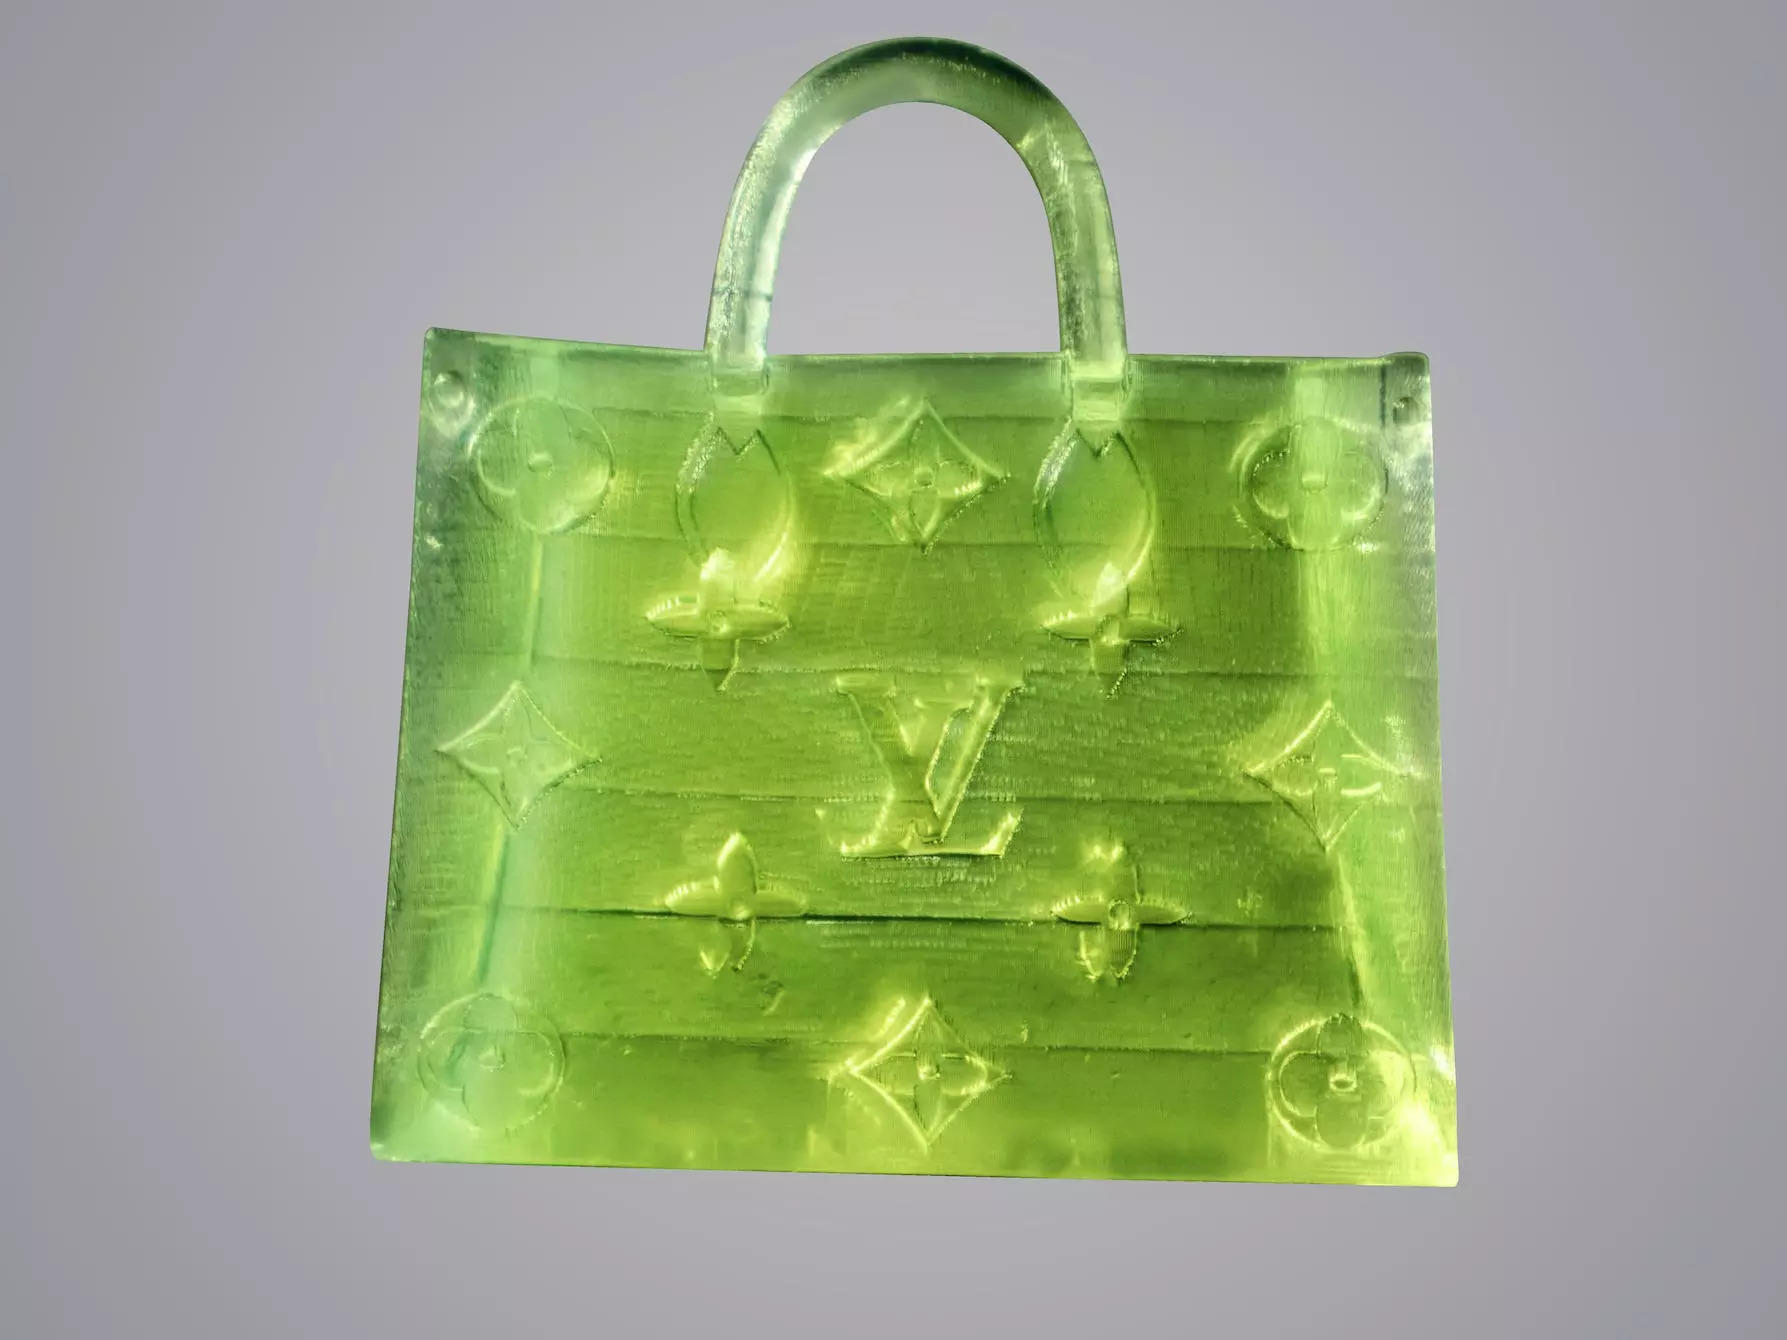 A microscopic, knockoff Louis Vuitton handbag smaller than a grain of salt  just sold for $63,750